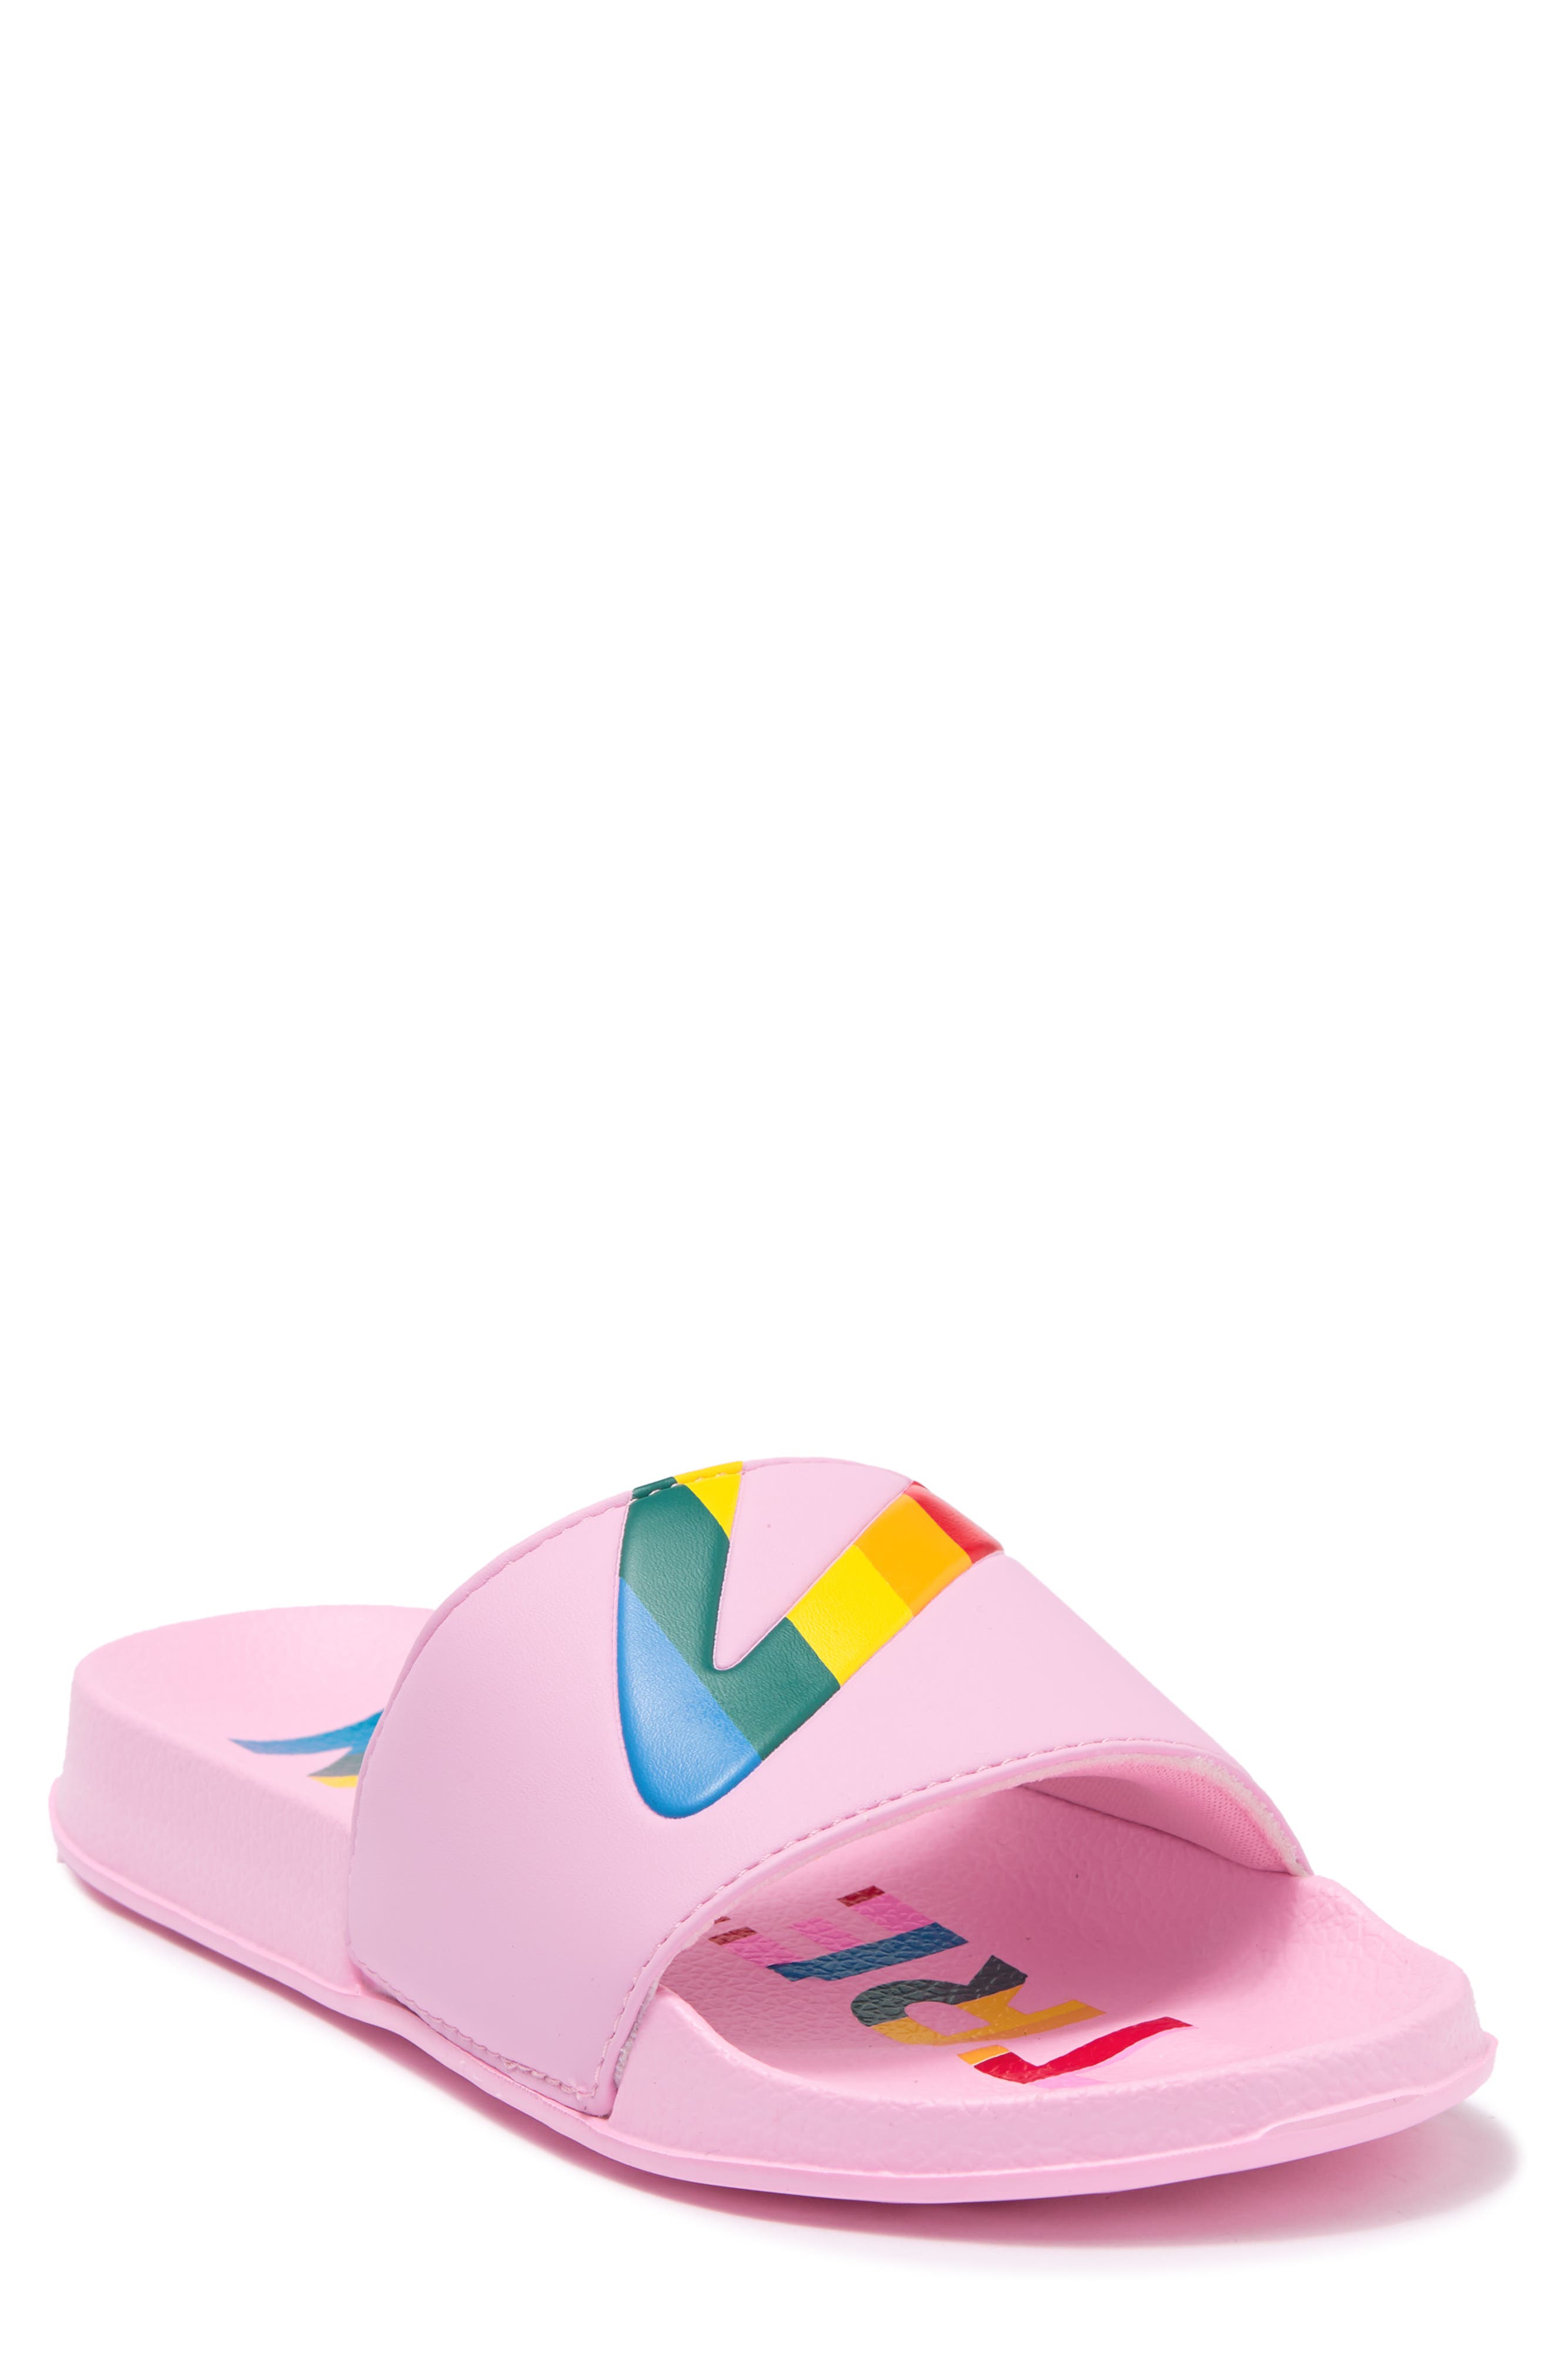 Tretorn Tragrant Slide Sandal In Pink/rainbow